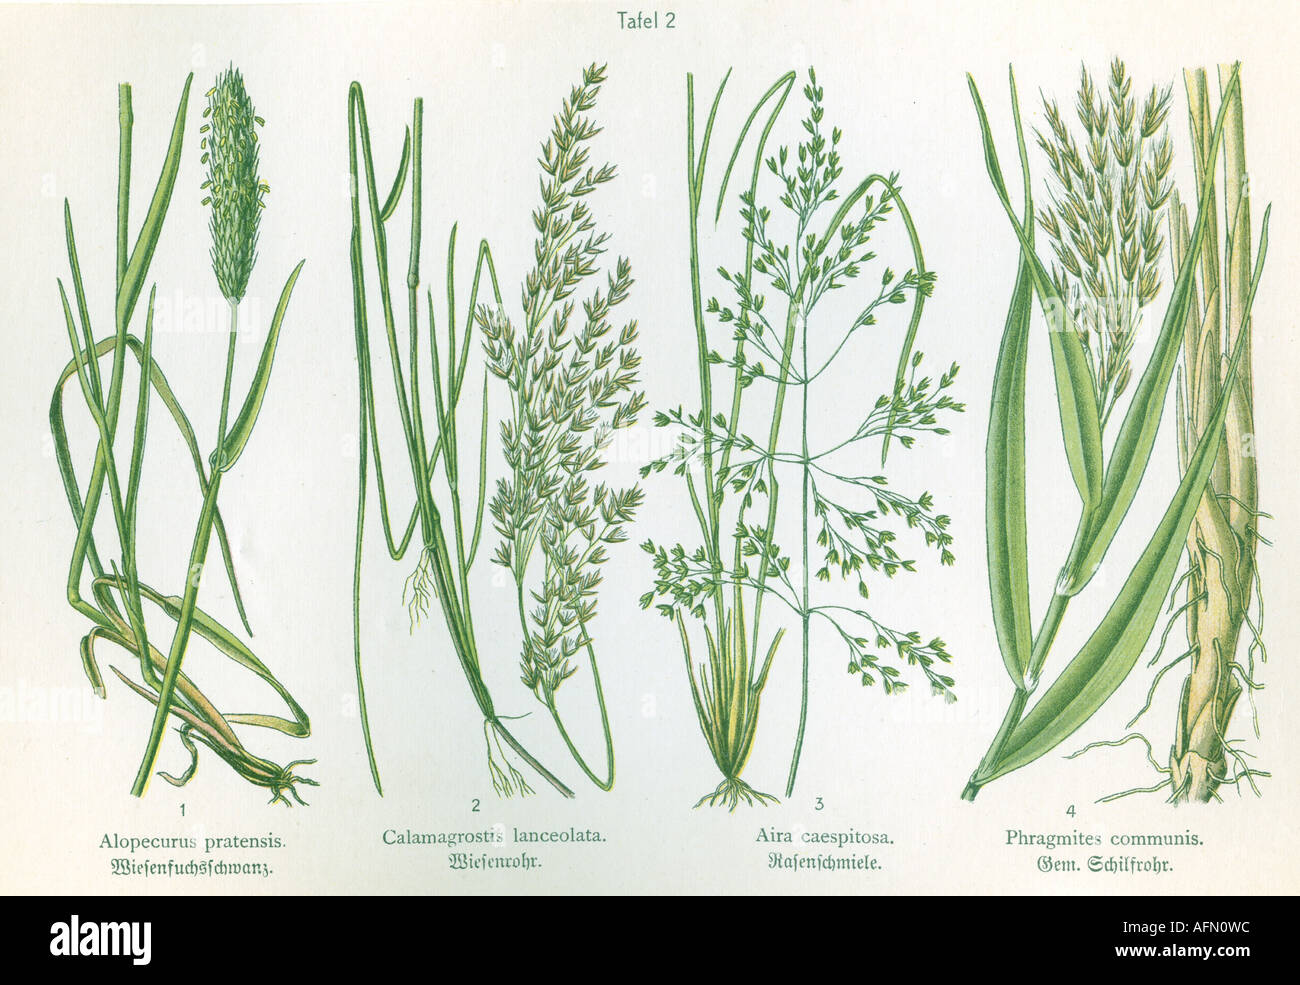 botany, four illustrations, Foxtail (Alopecurus pratensis), Calamagrostis lancelata, Tufted Hair Grass (Aira caespitosa), Common reed (Phragmites communis), circa 1914, Stock Photo